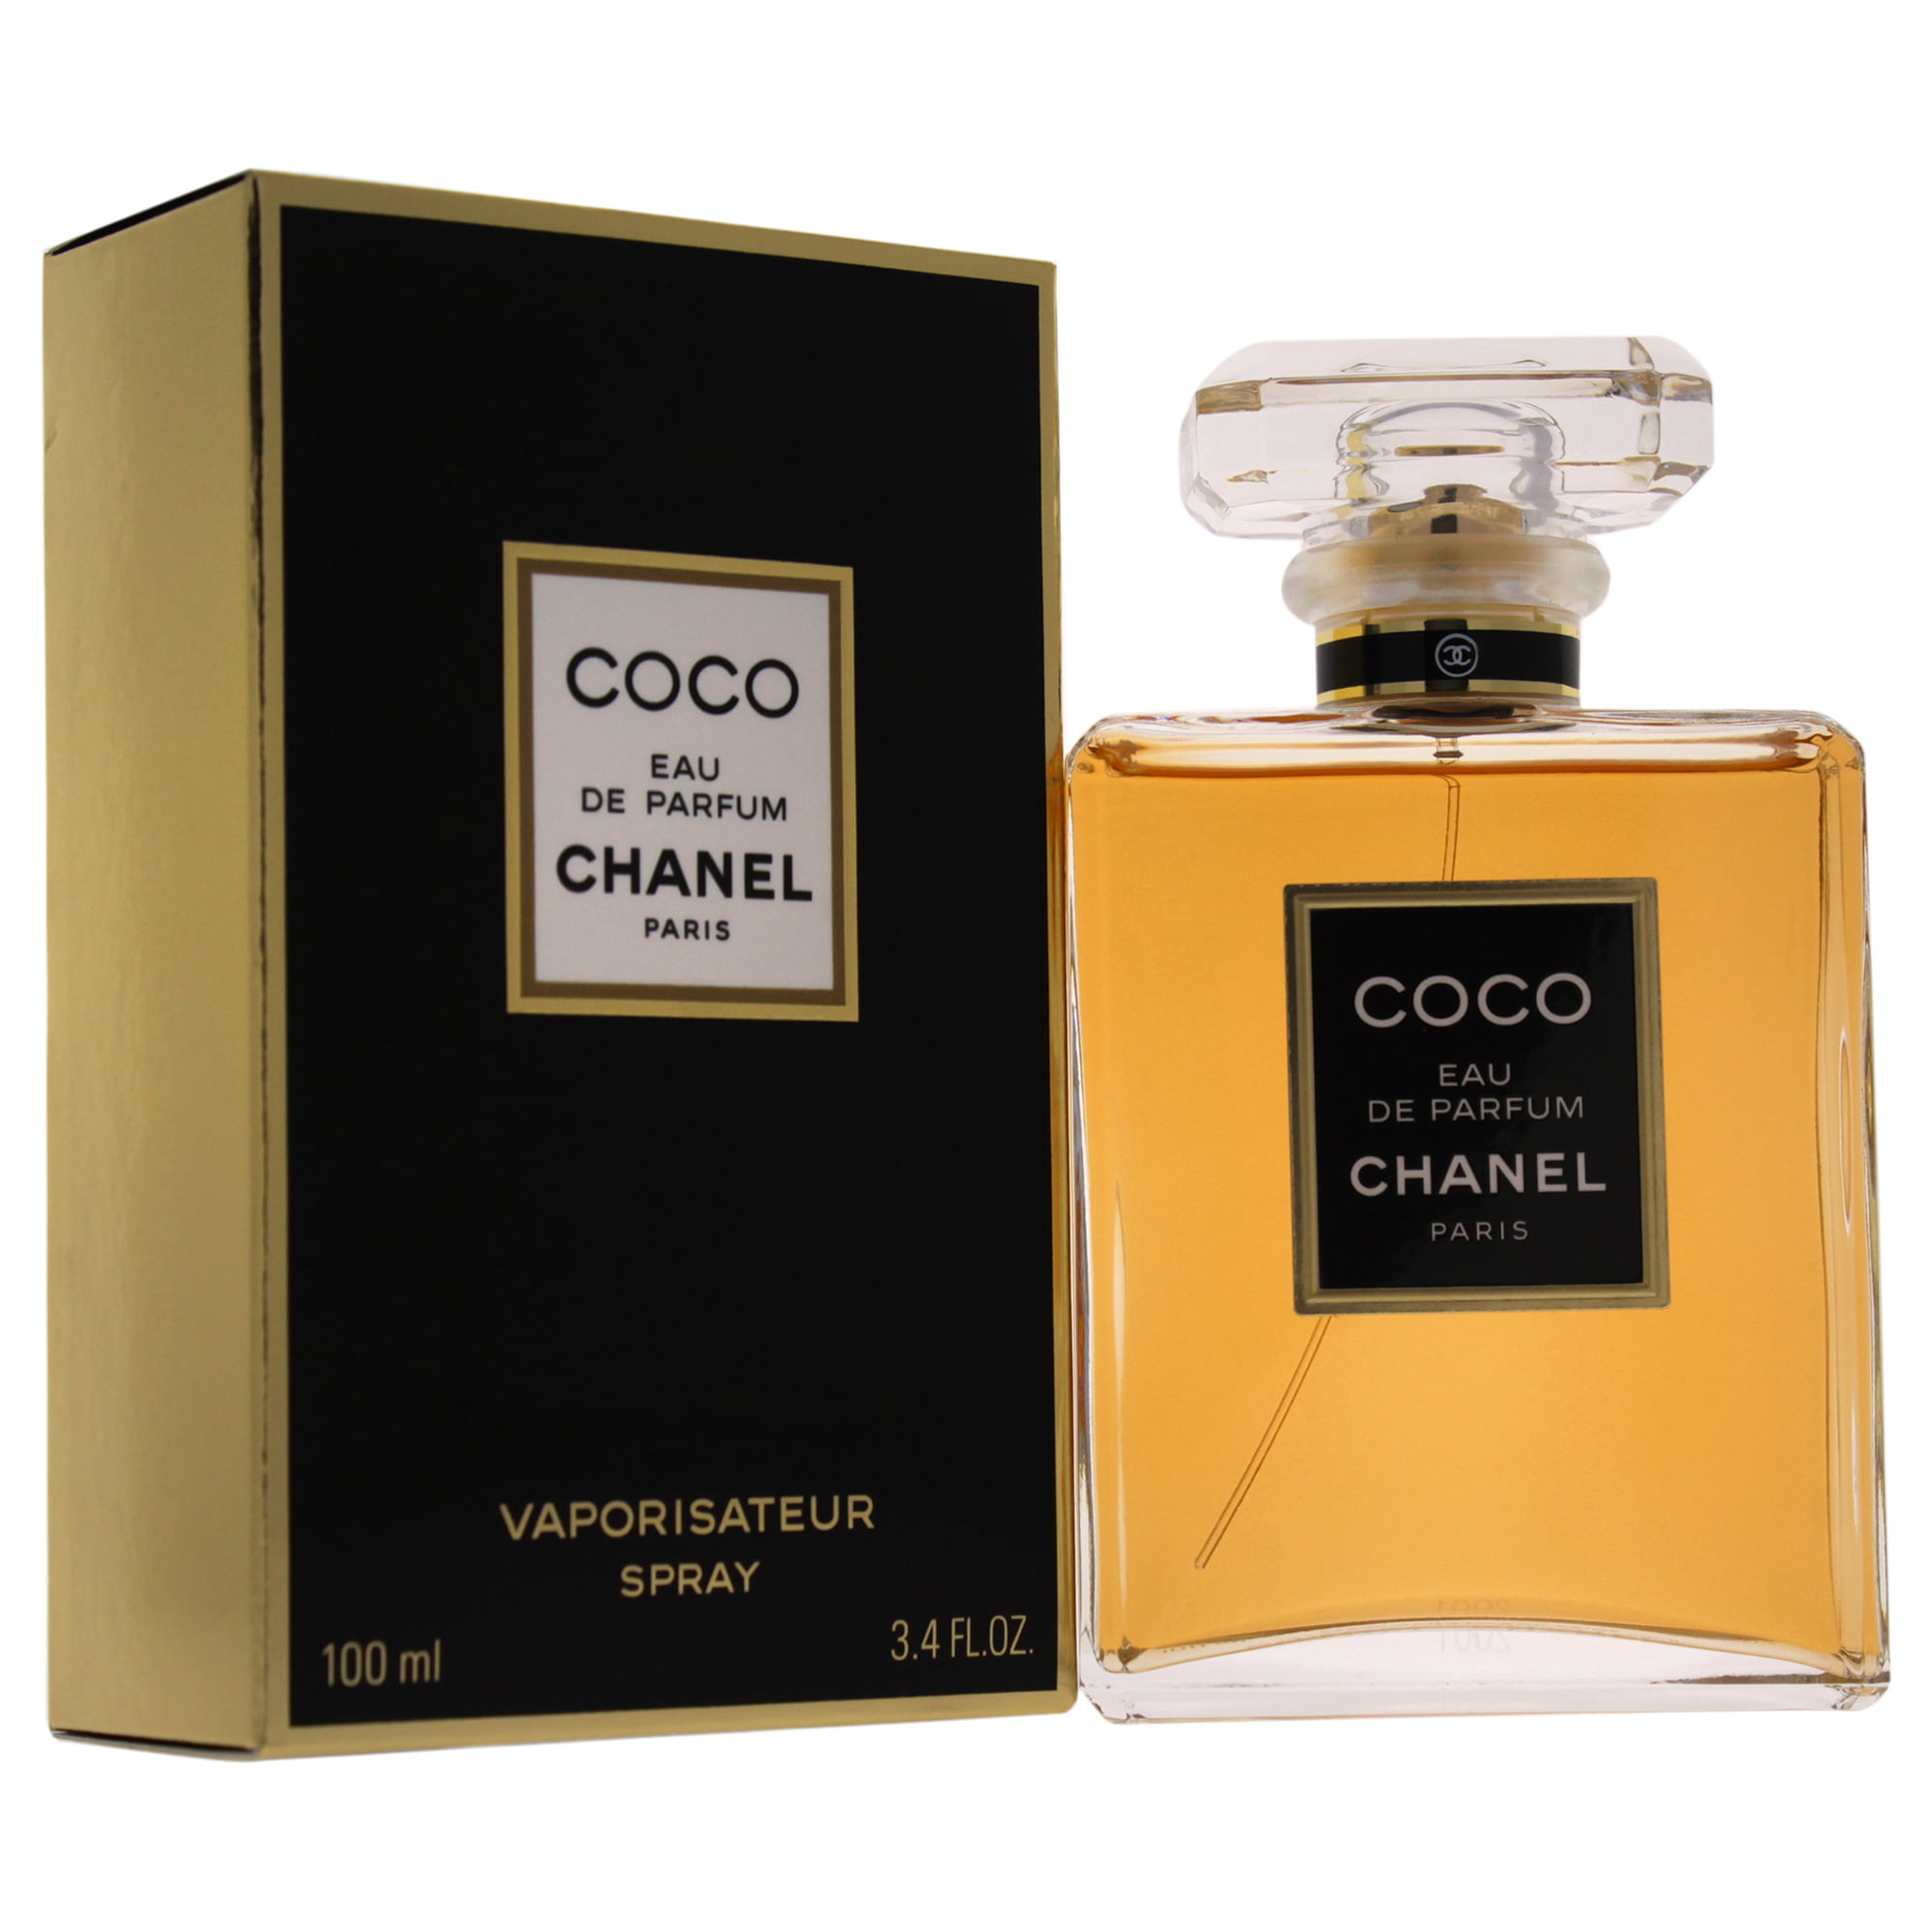 CHANEL Coco Eau de Parfum, Perfume for Women, 3.4 Oz - Walmart.com